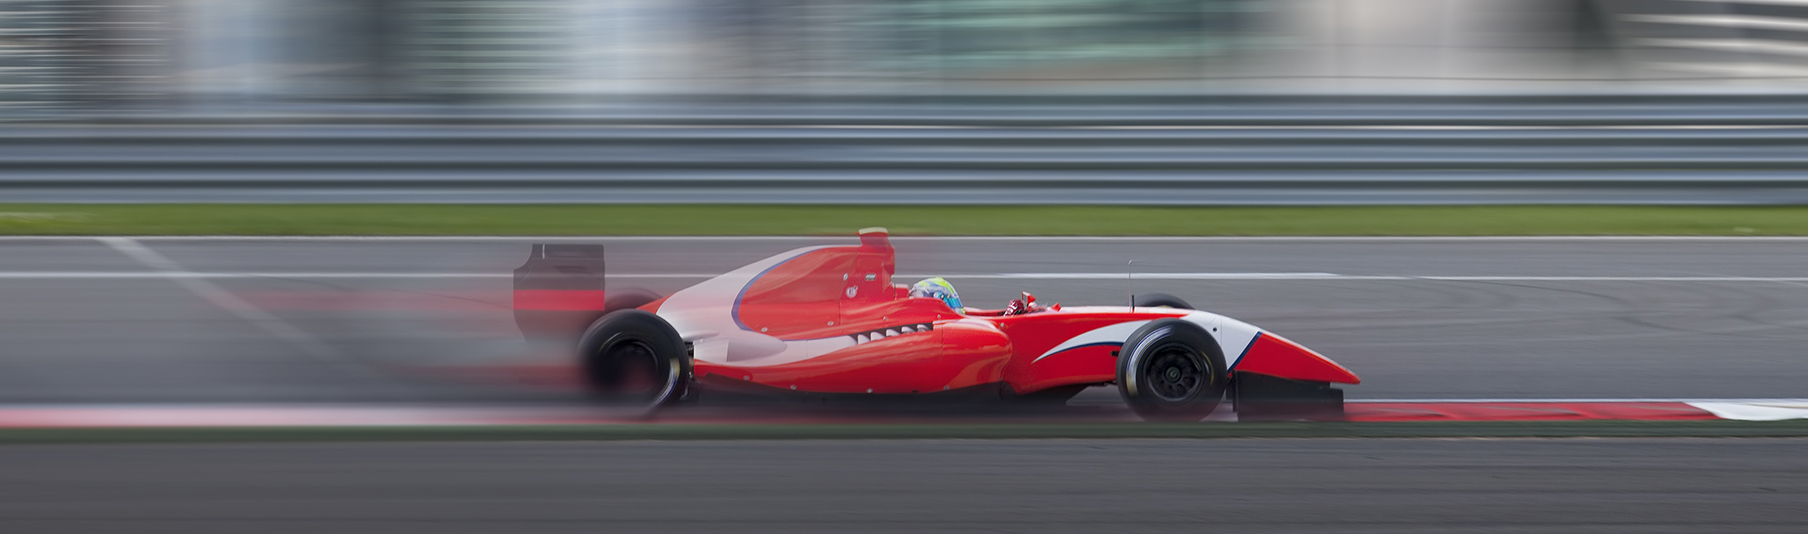 Motor Sports Insurance: A red racecar speeding down a track